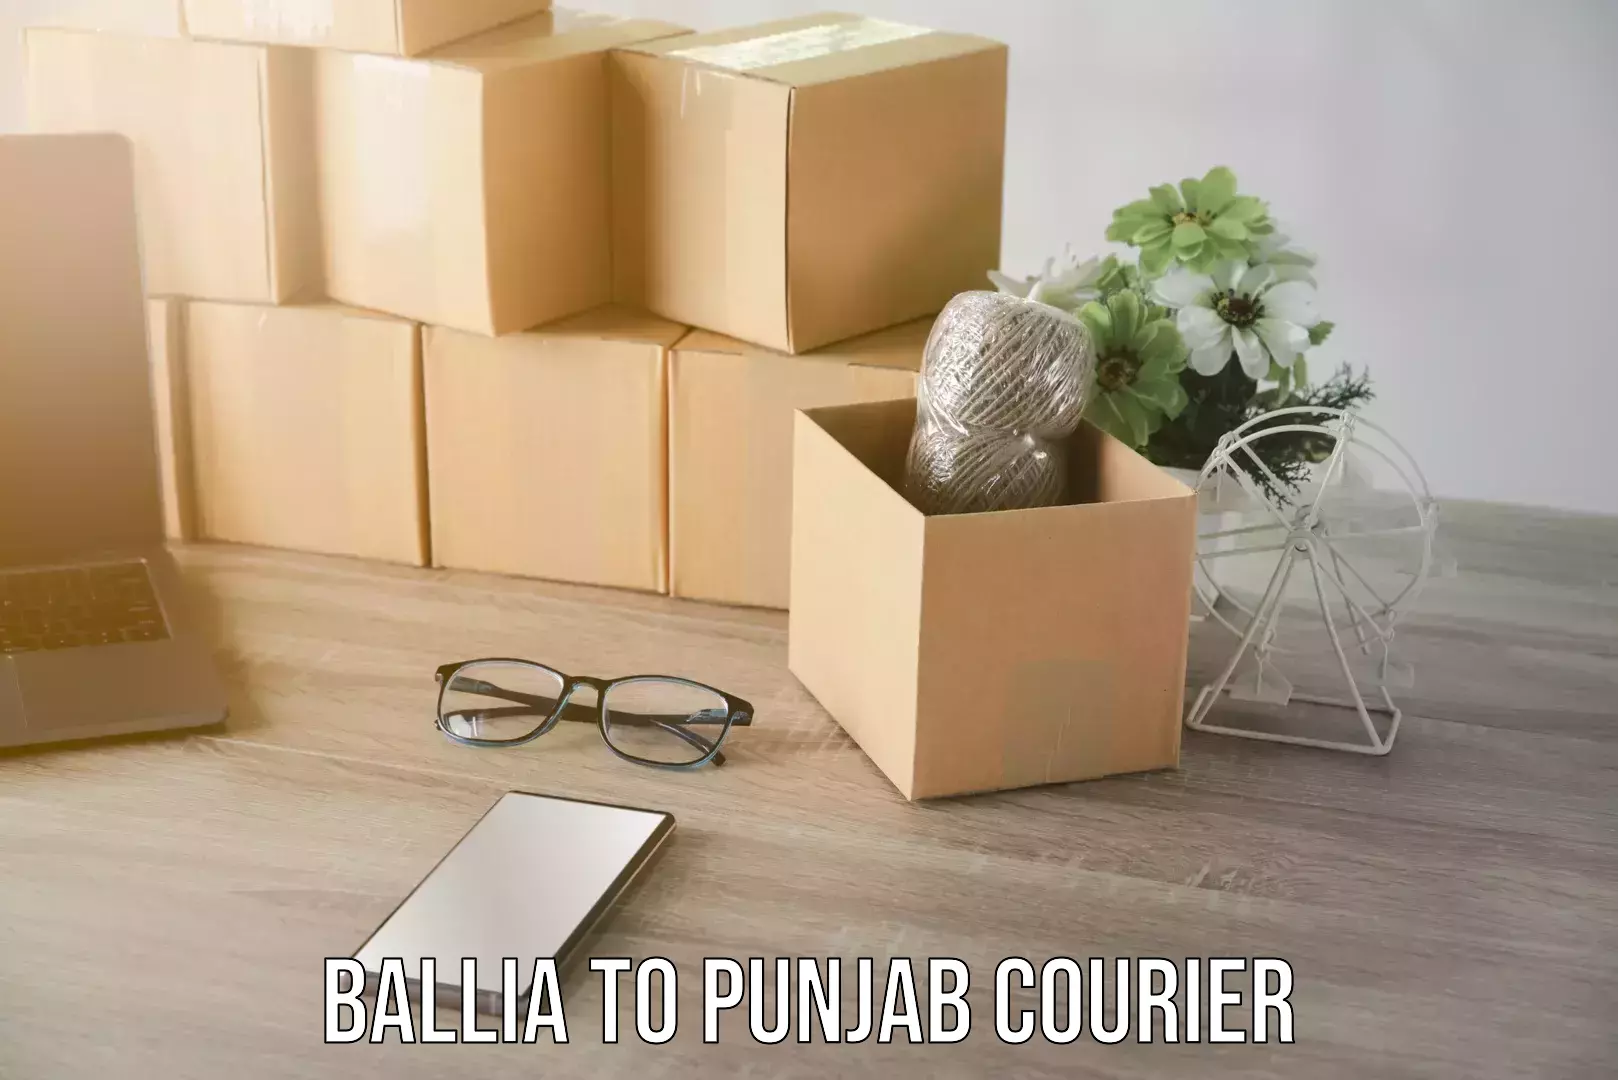 Cargo delivery service Ballia to Punjab